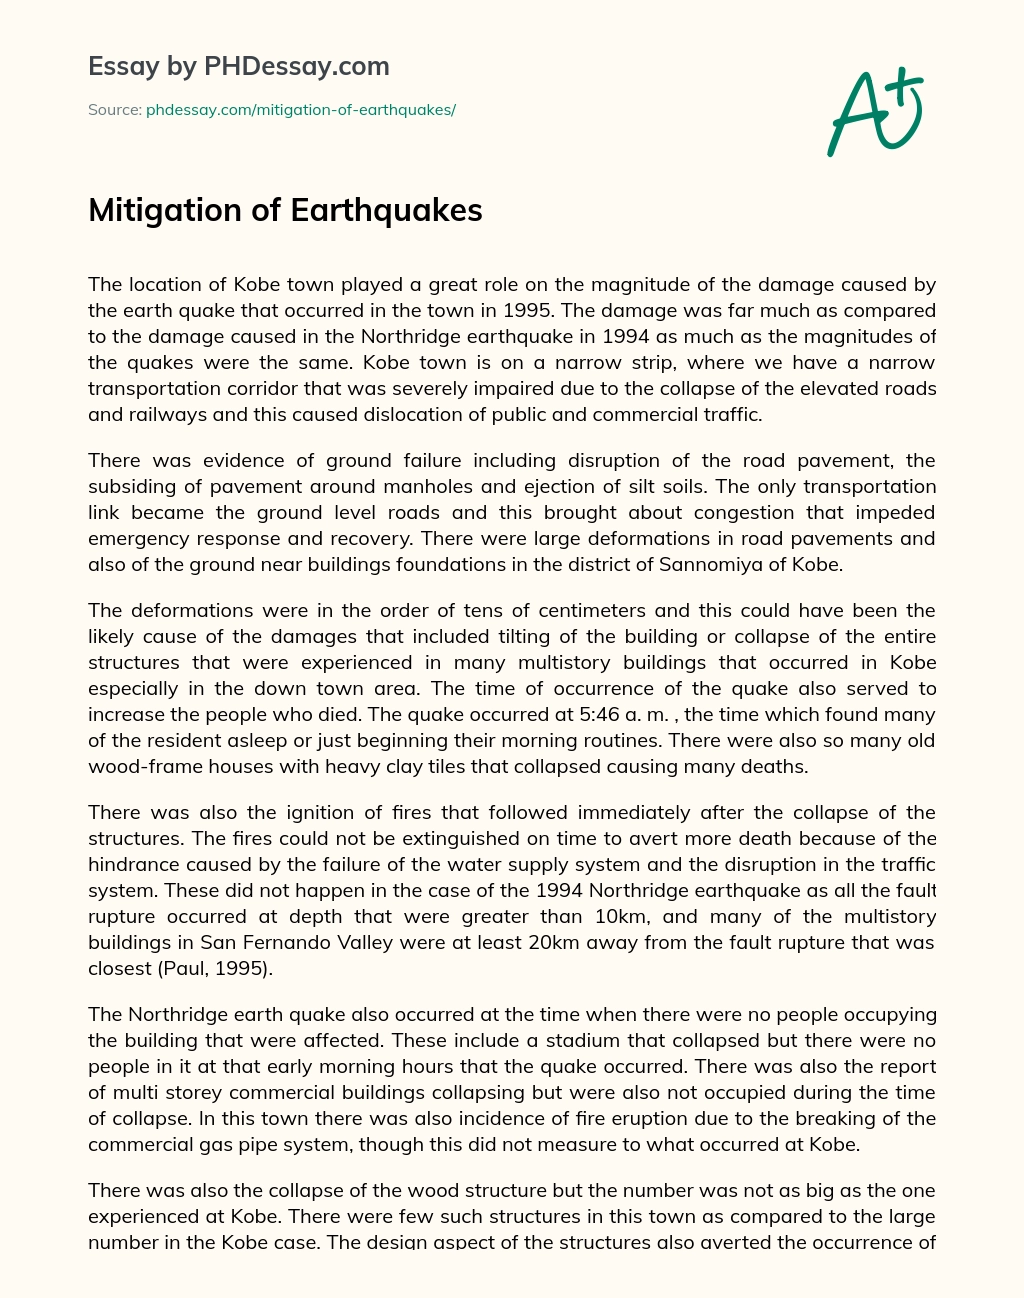 Mitigation of Earthquakes essay